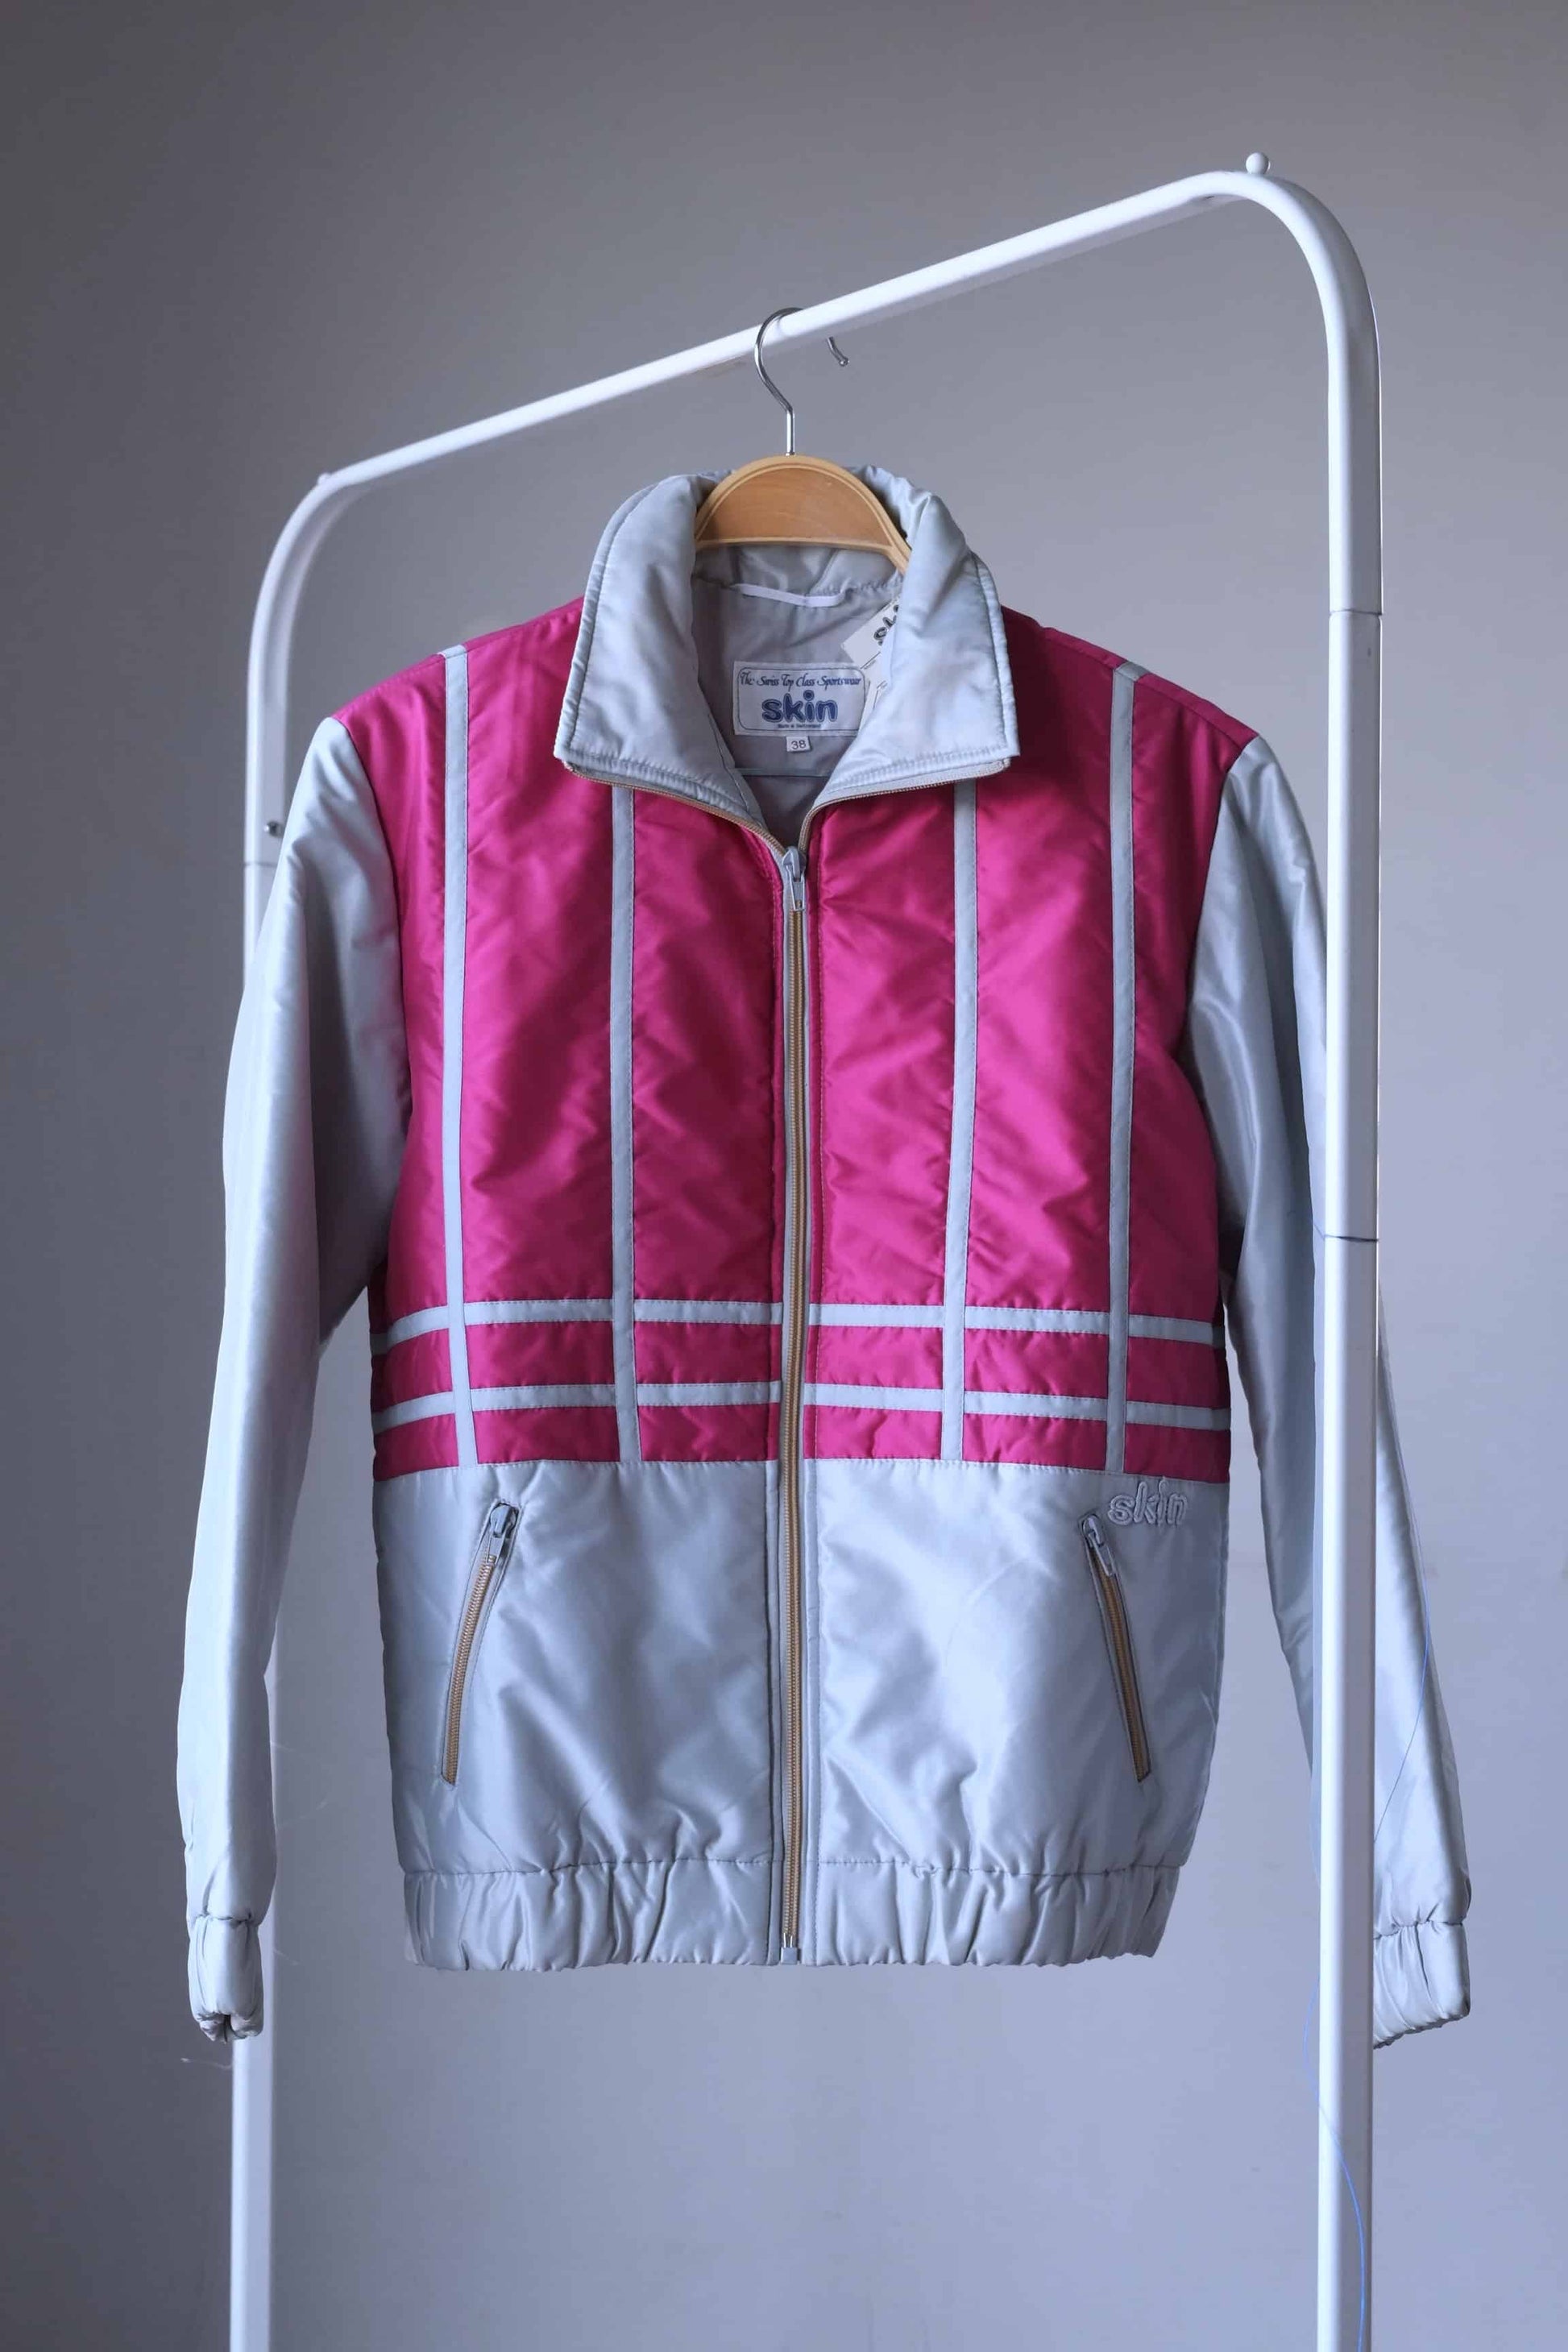 Vintage 80's Women's Skiing Jacket pink grey